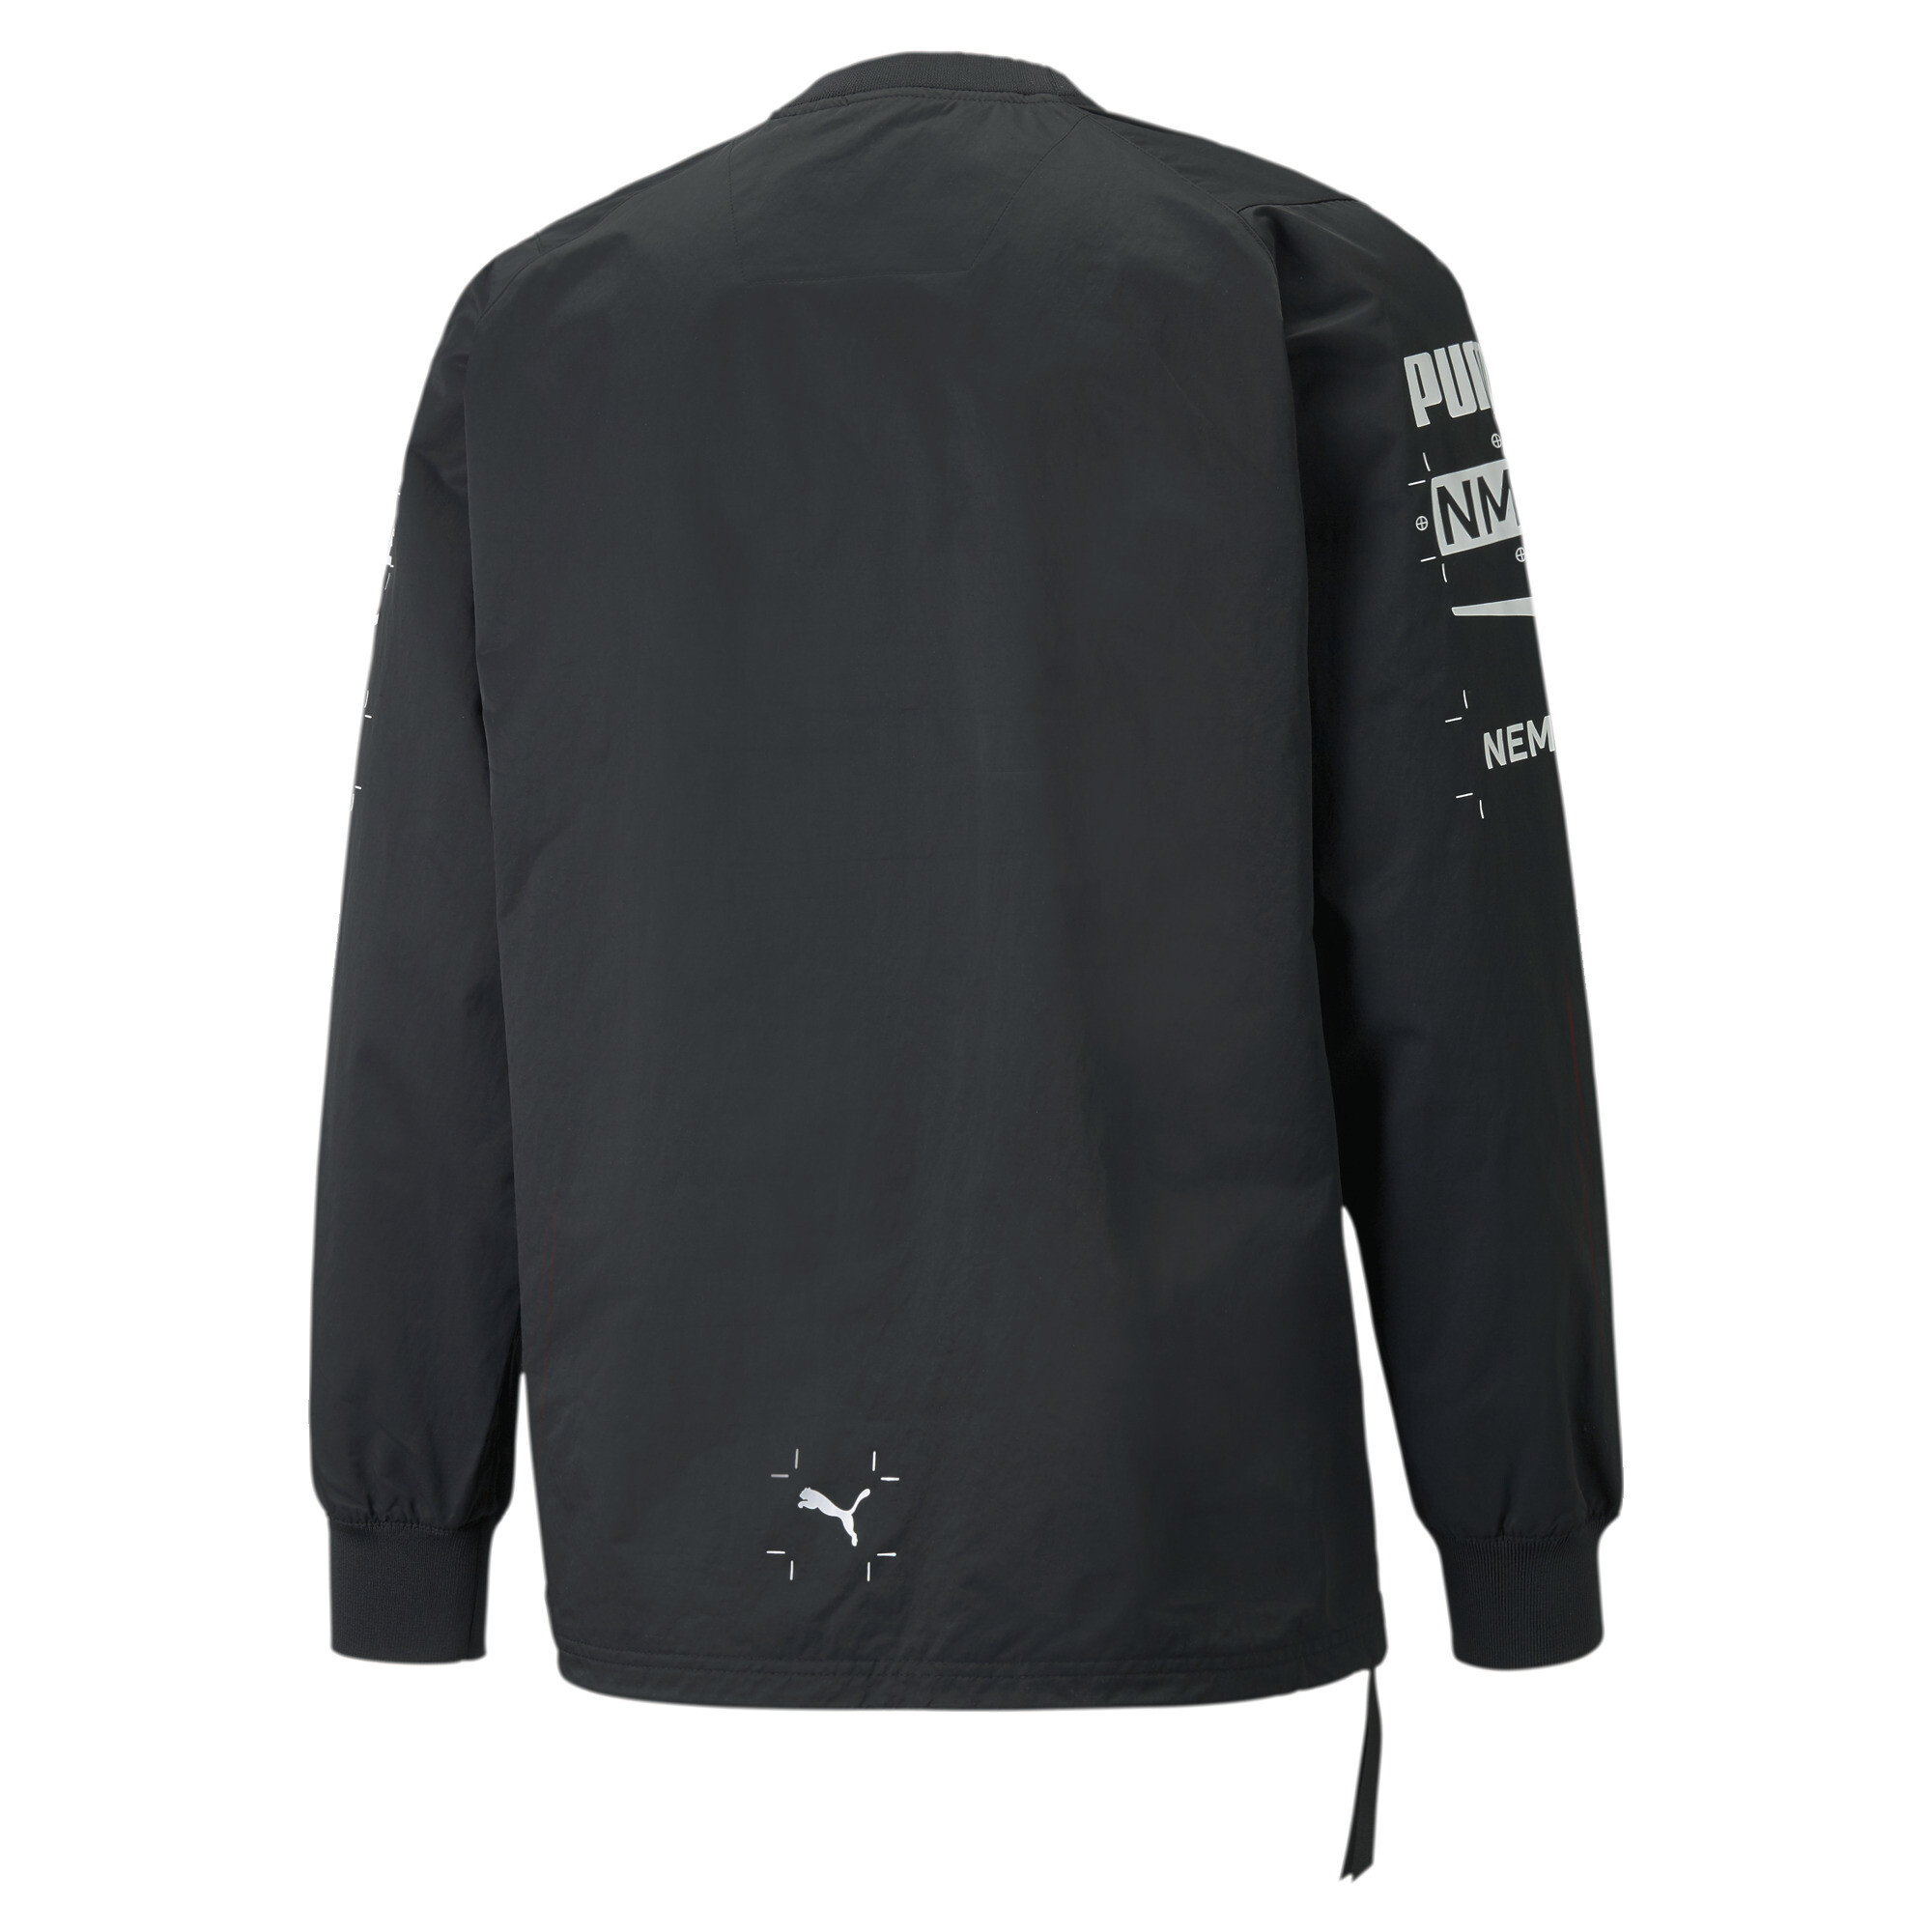 Men's Puma X NEMEN Tech Crew Neck's Sweatshirt, Black, Size M, Clothing